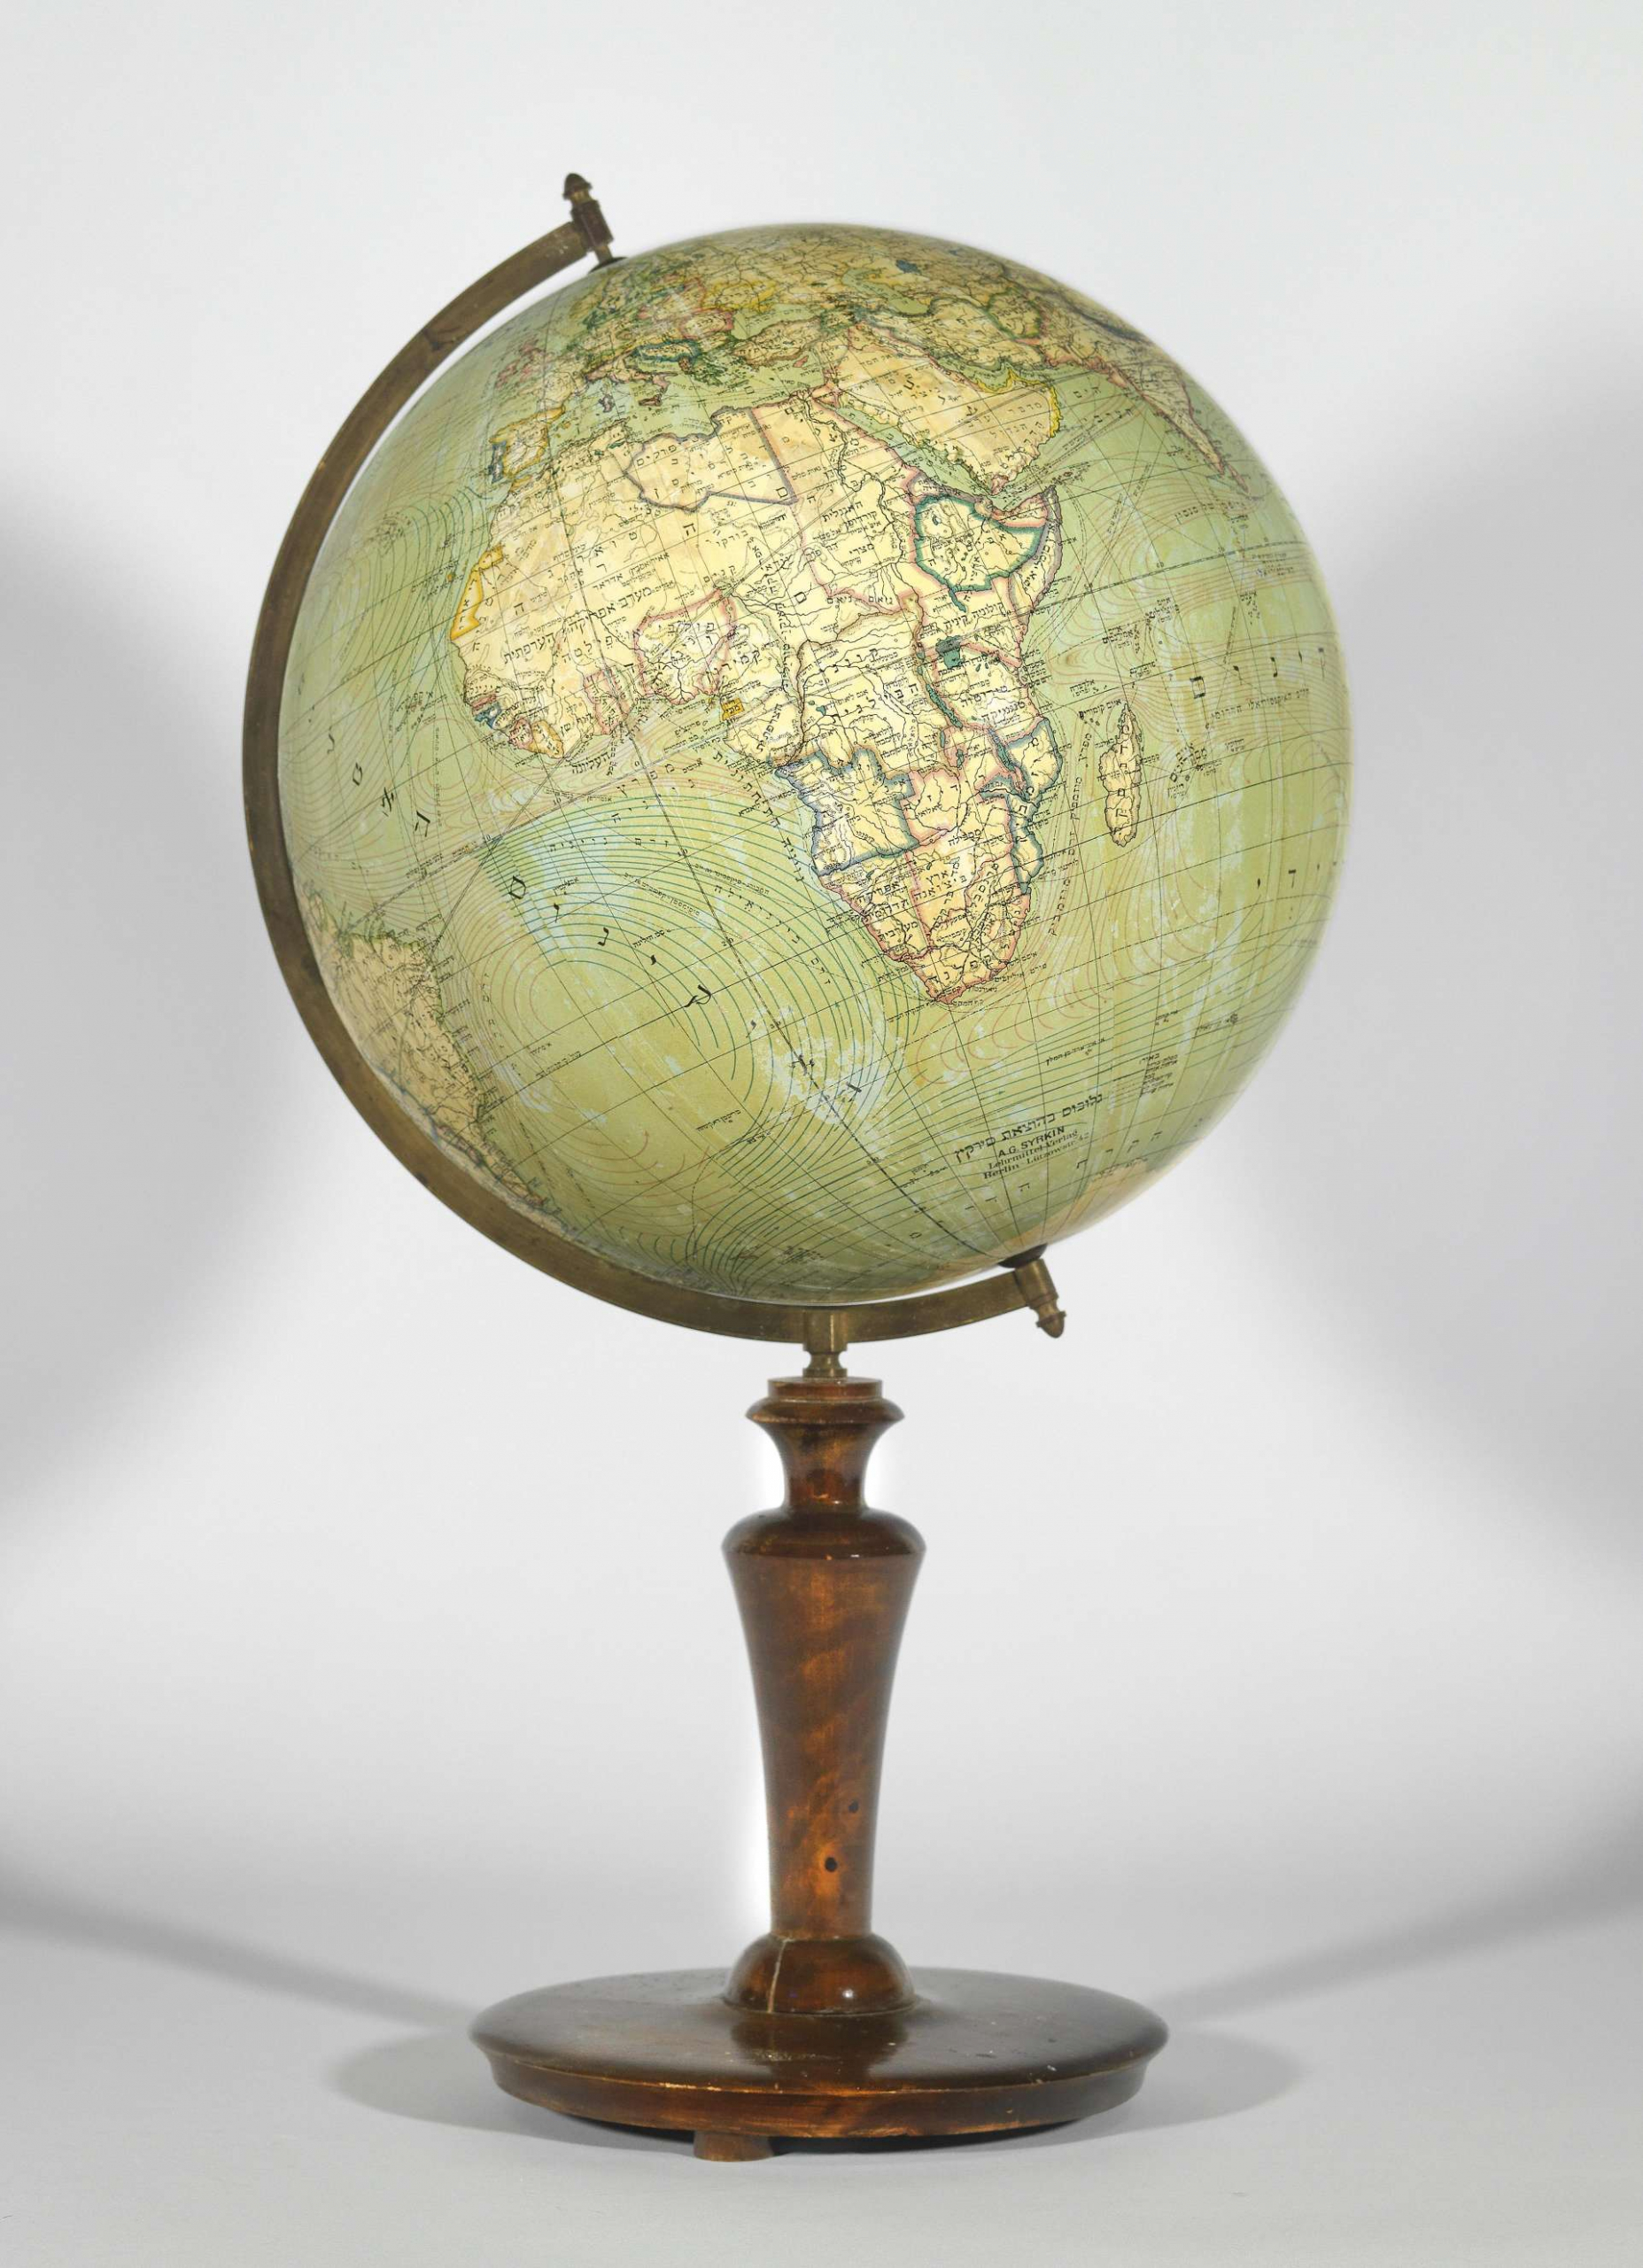 Erdglobus, terrestrial globe, Syrkin